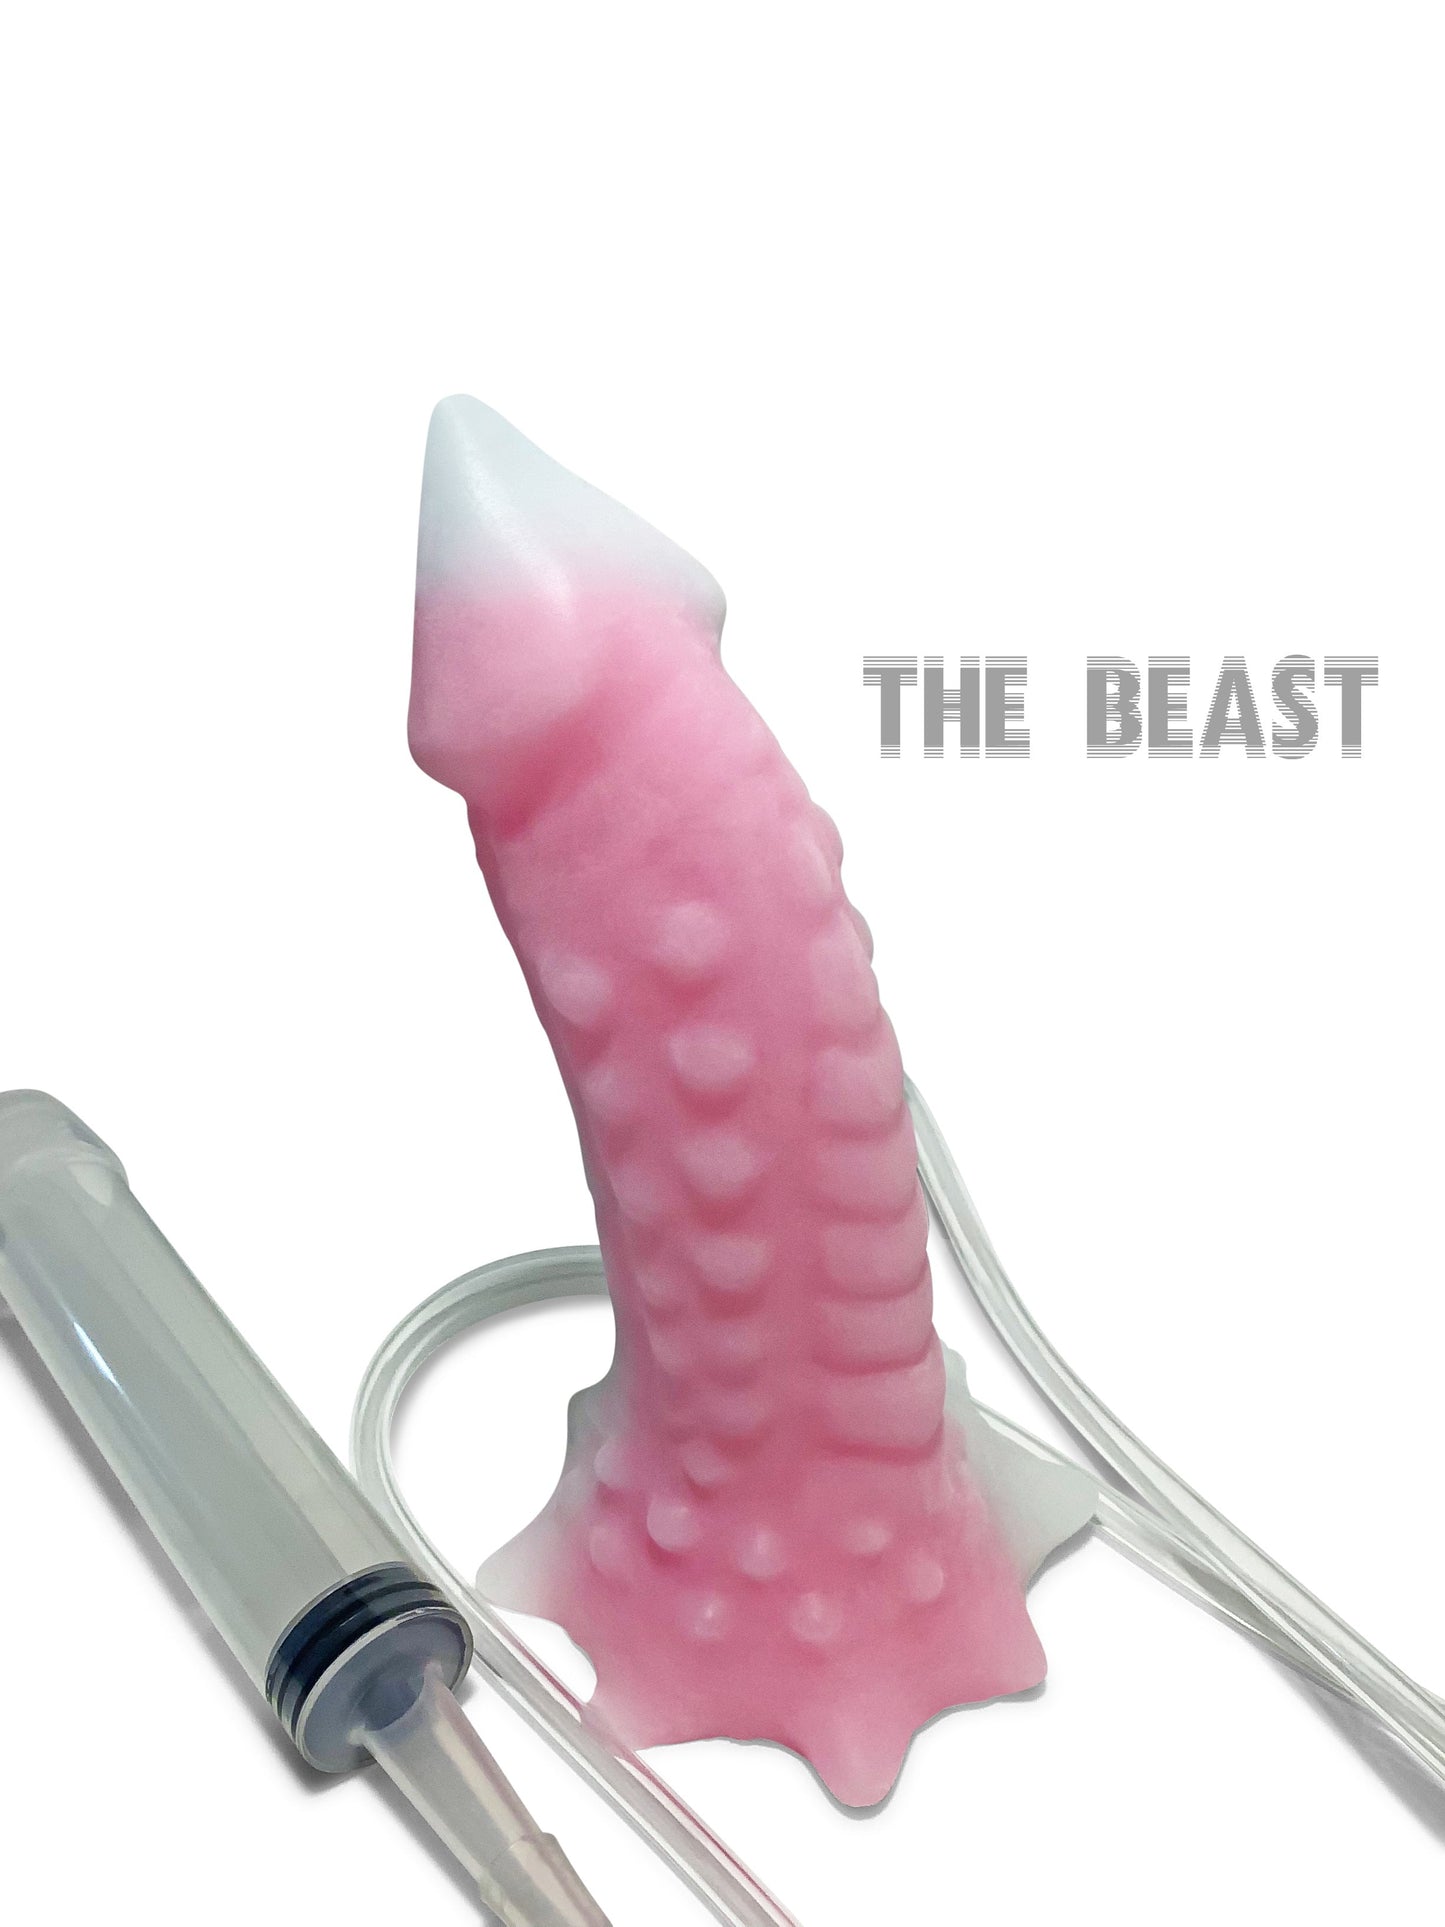 Ejaculating Dildo "The Beast" Dildo Squirting Penis Sex Toy